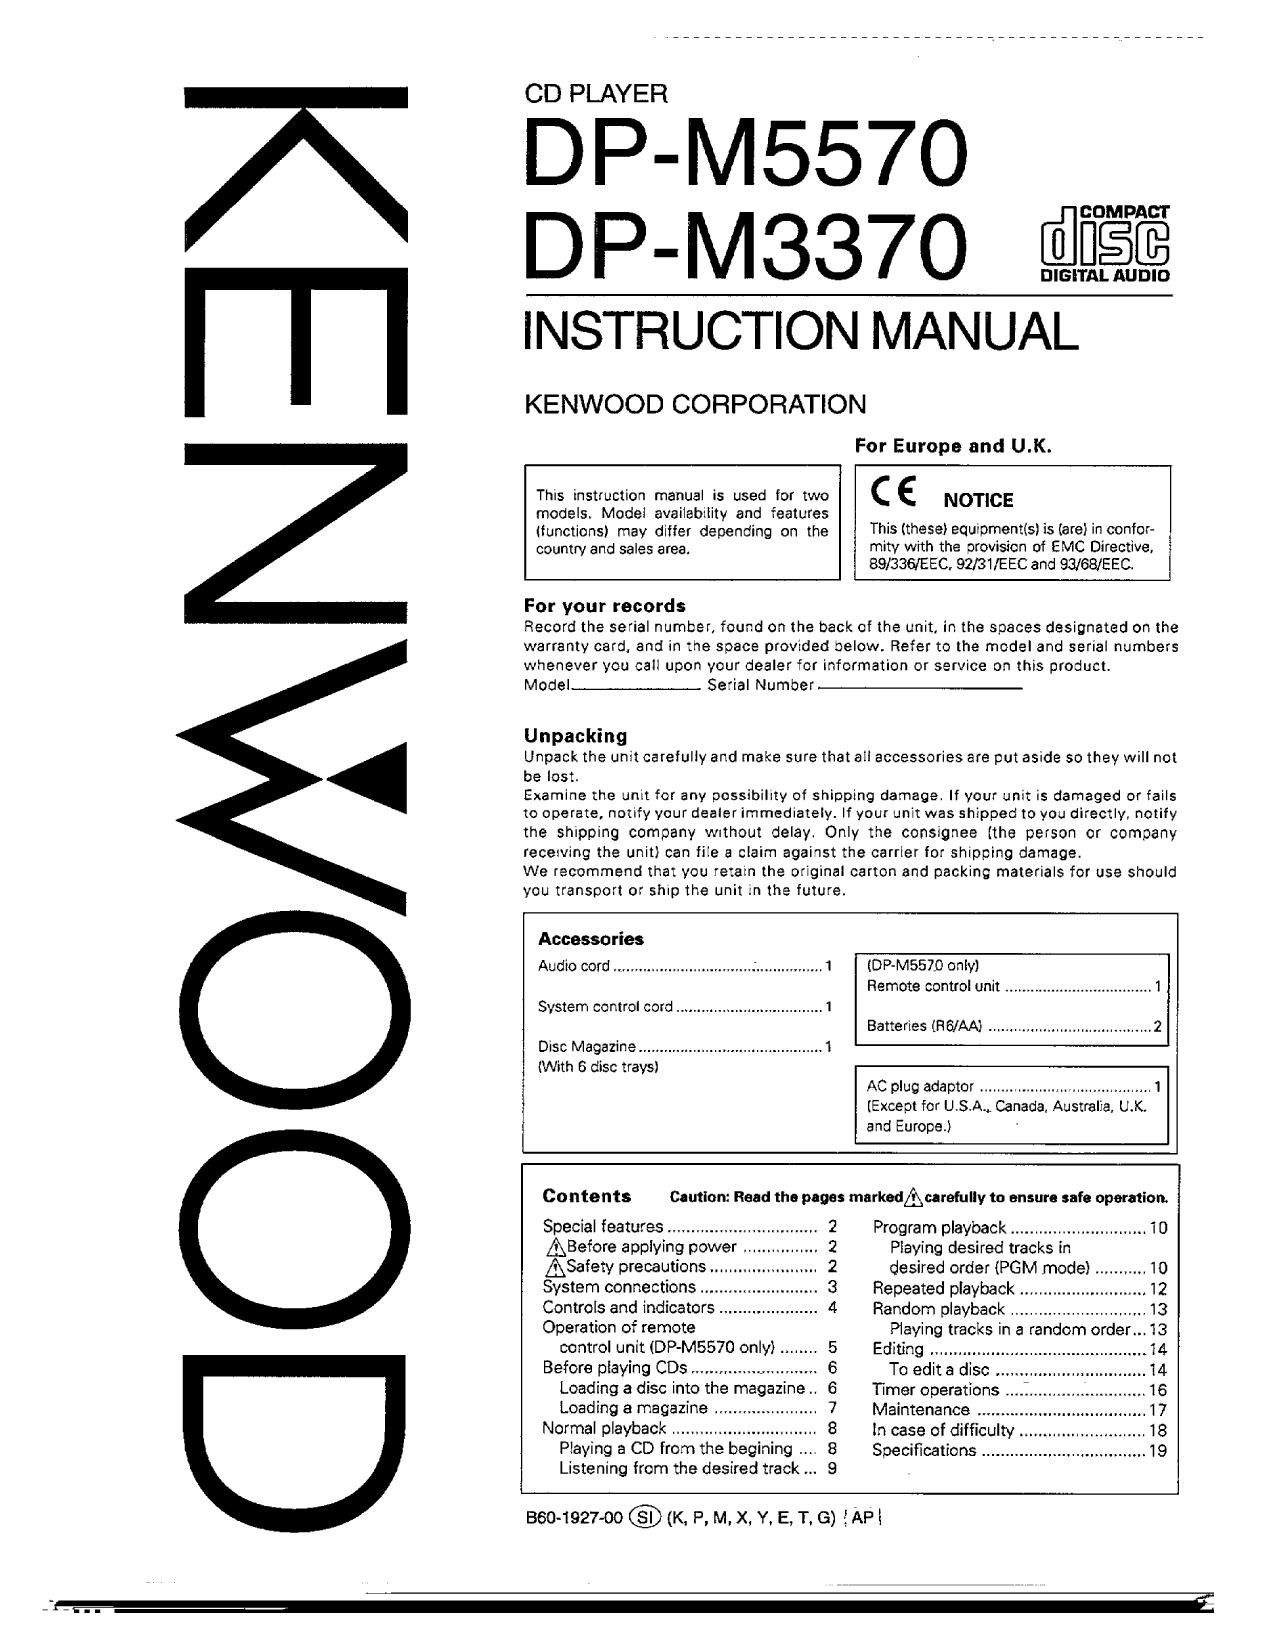 Kenwood DPM 3370 Owners Manual